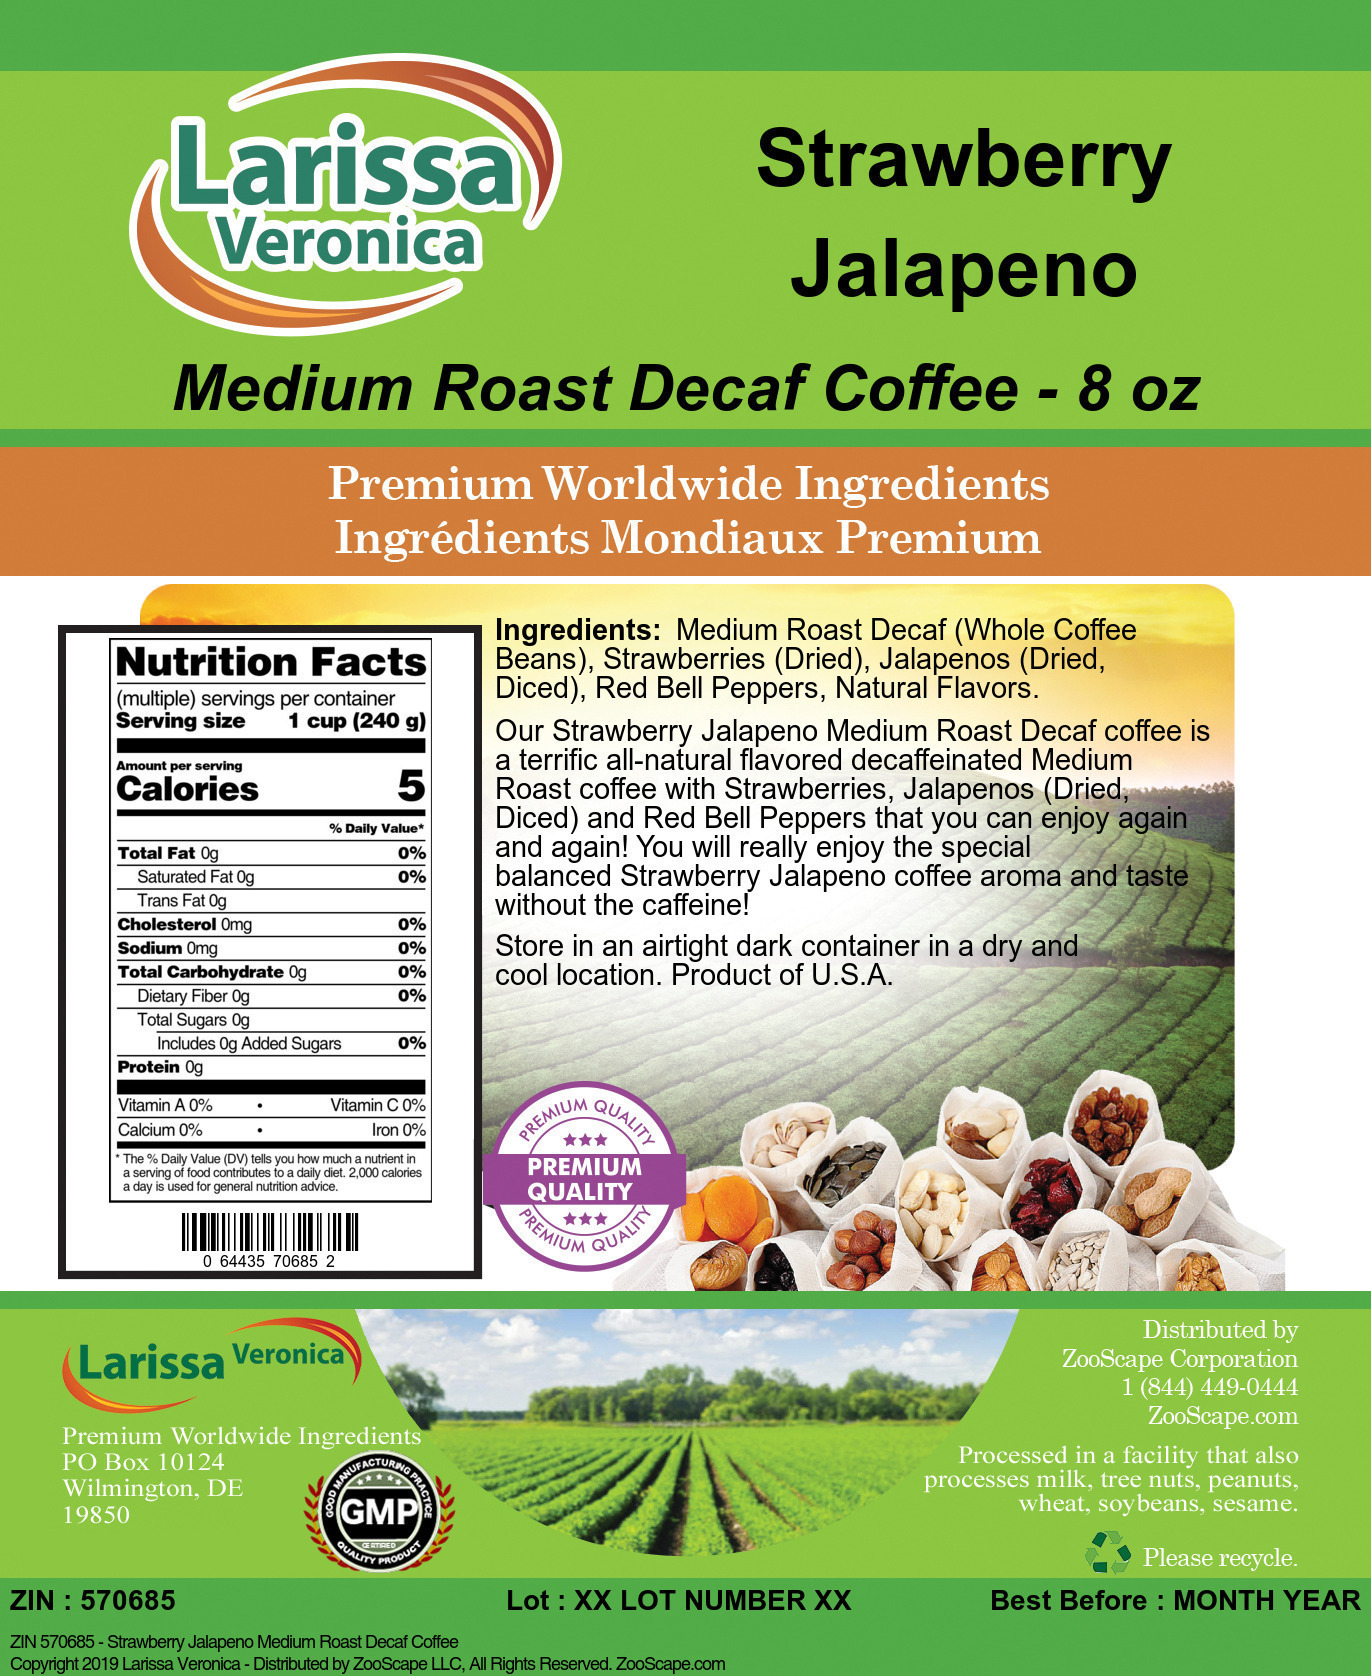 Strawberry Jalapeno Medium Roast Decaf Coffee - Label